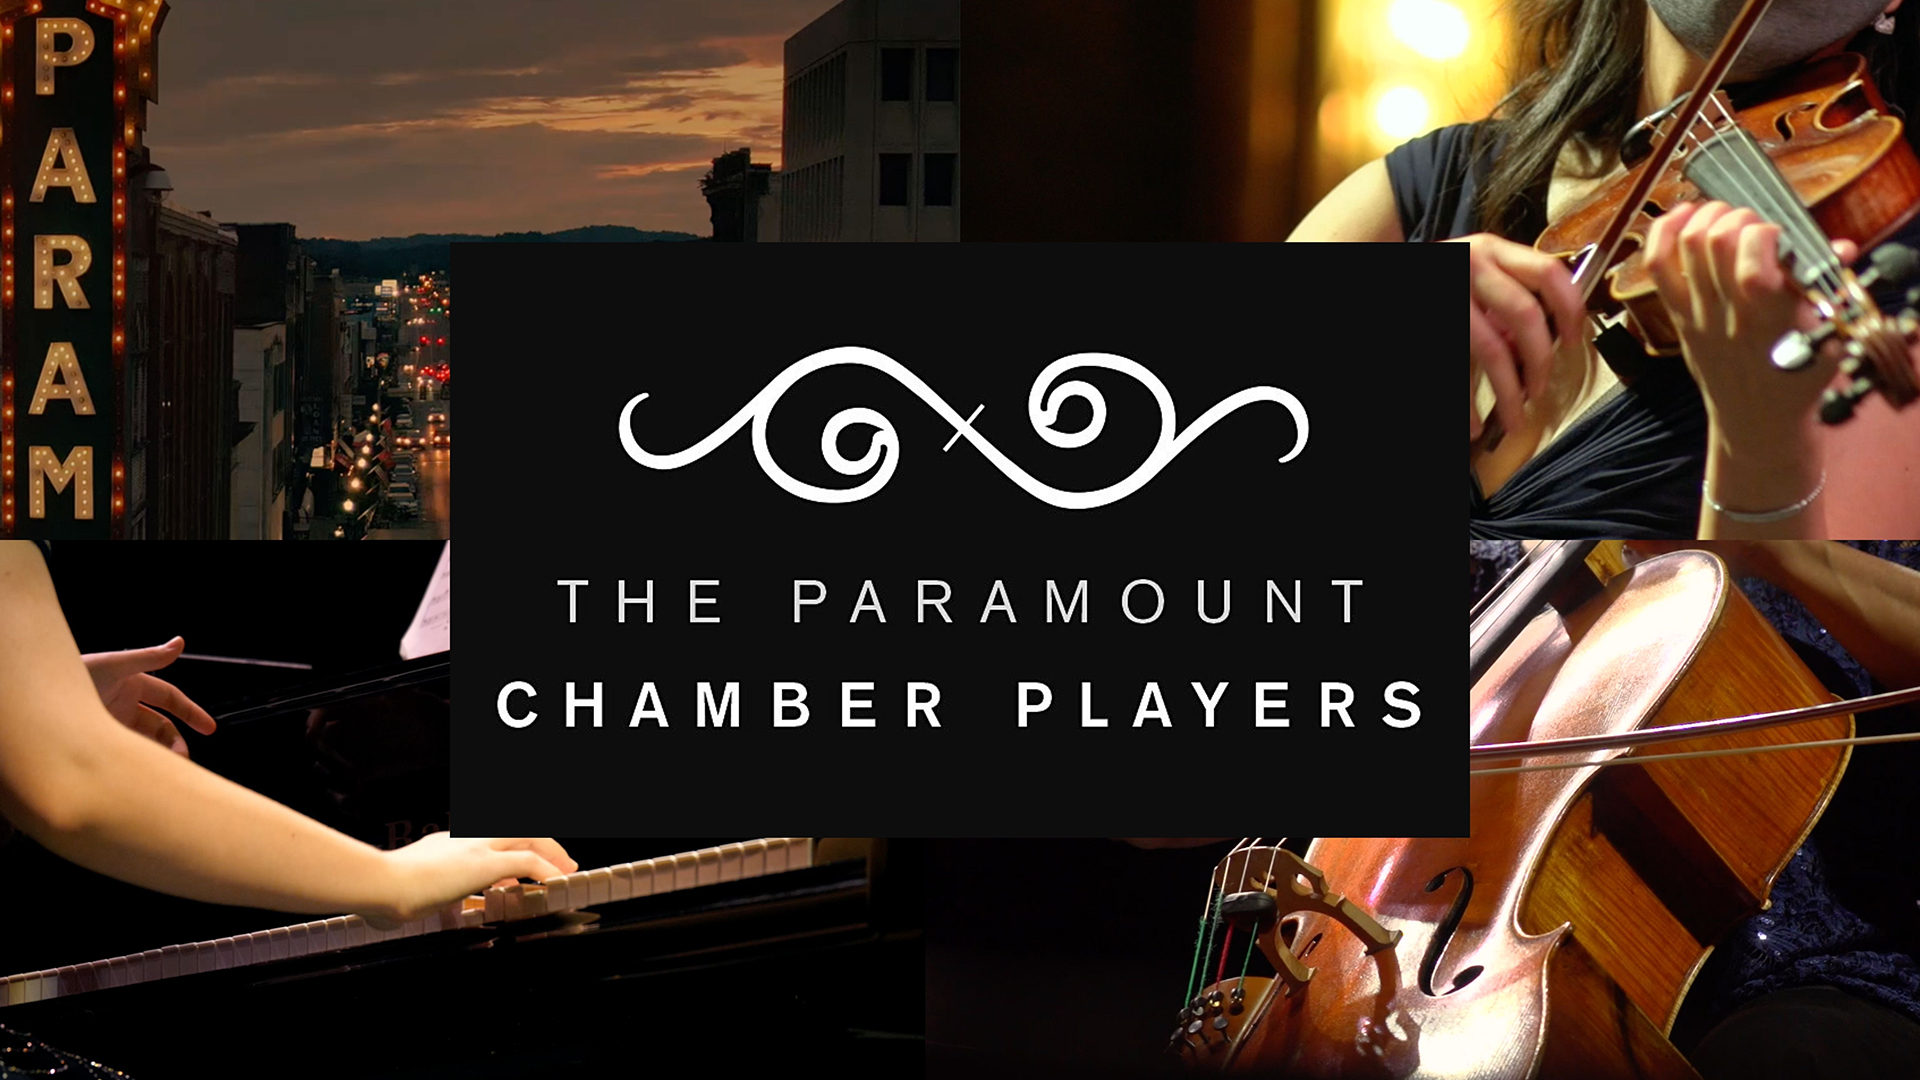 Chamber Players 1920 x 1080